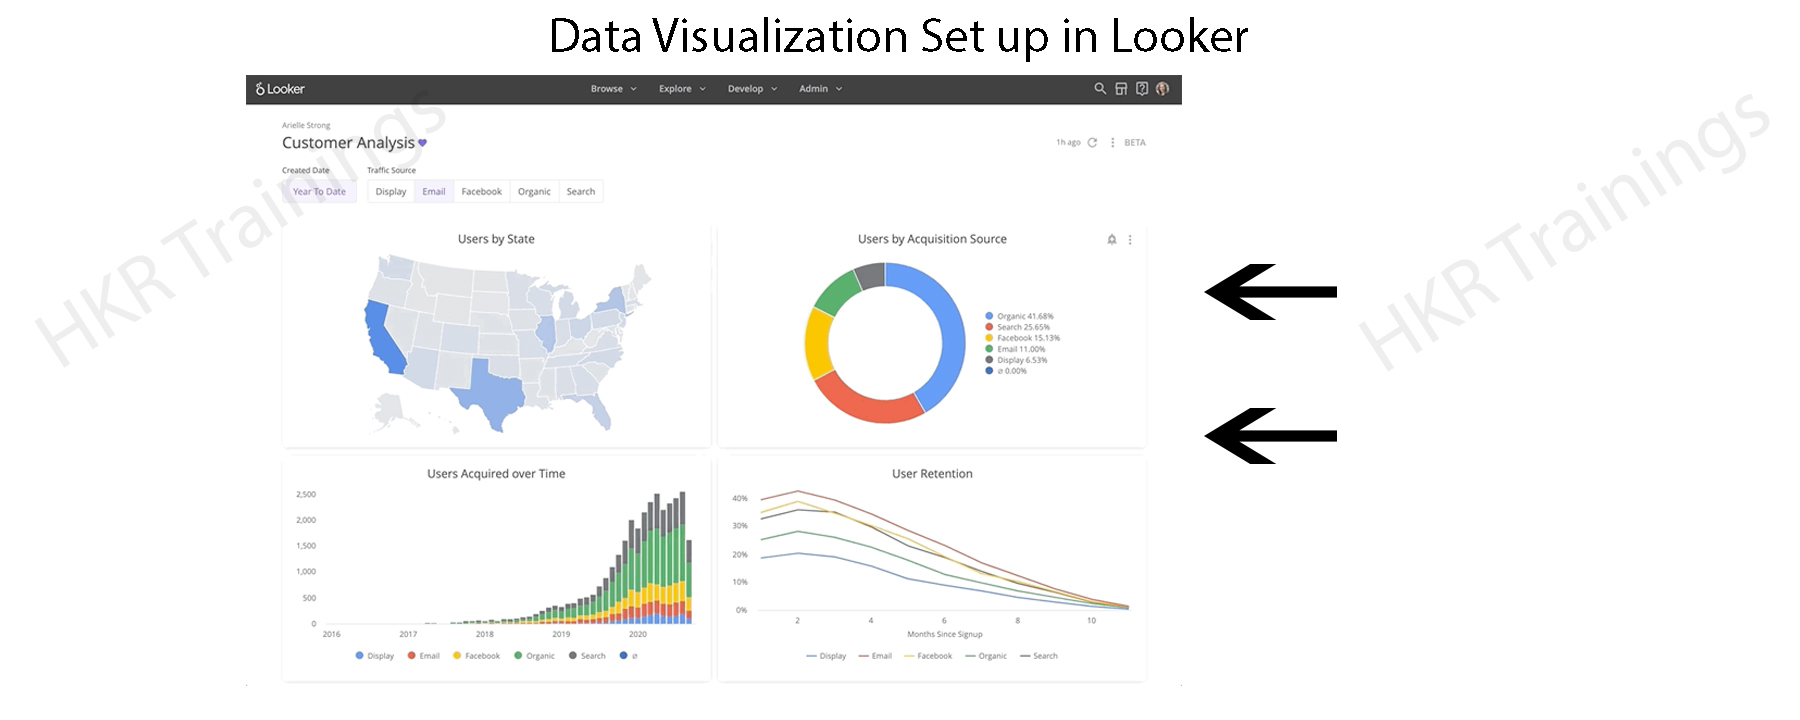 Data Visualization set up